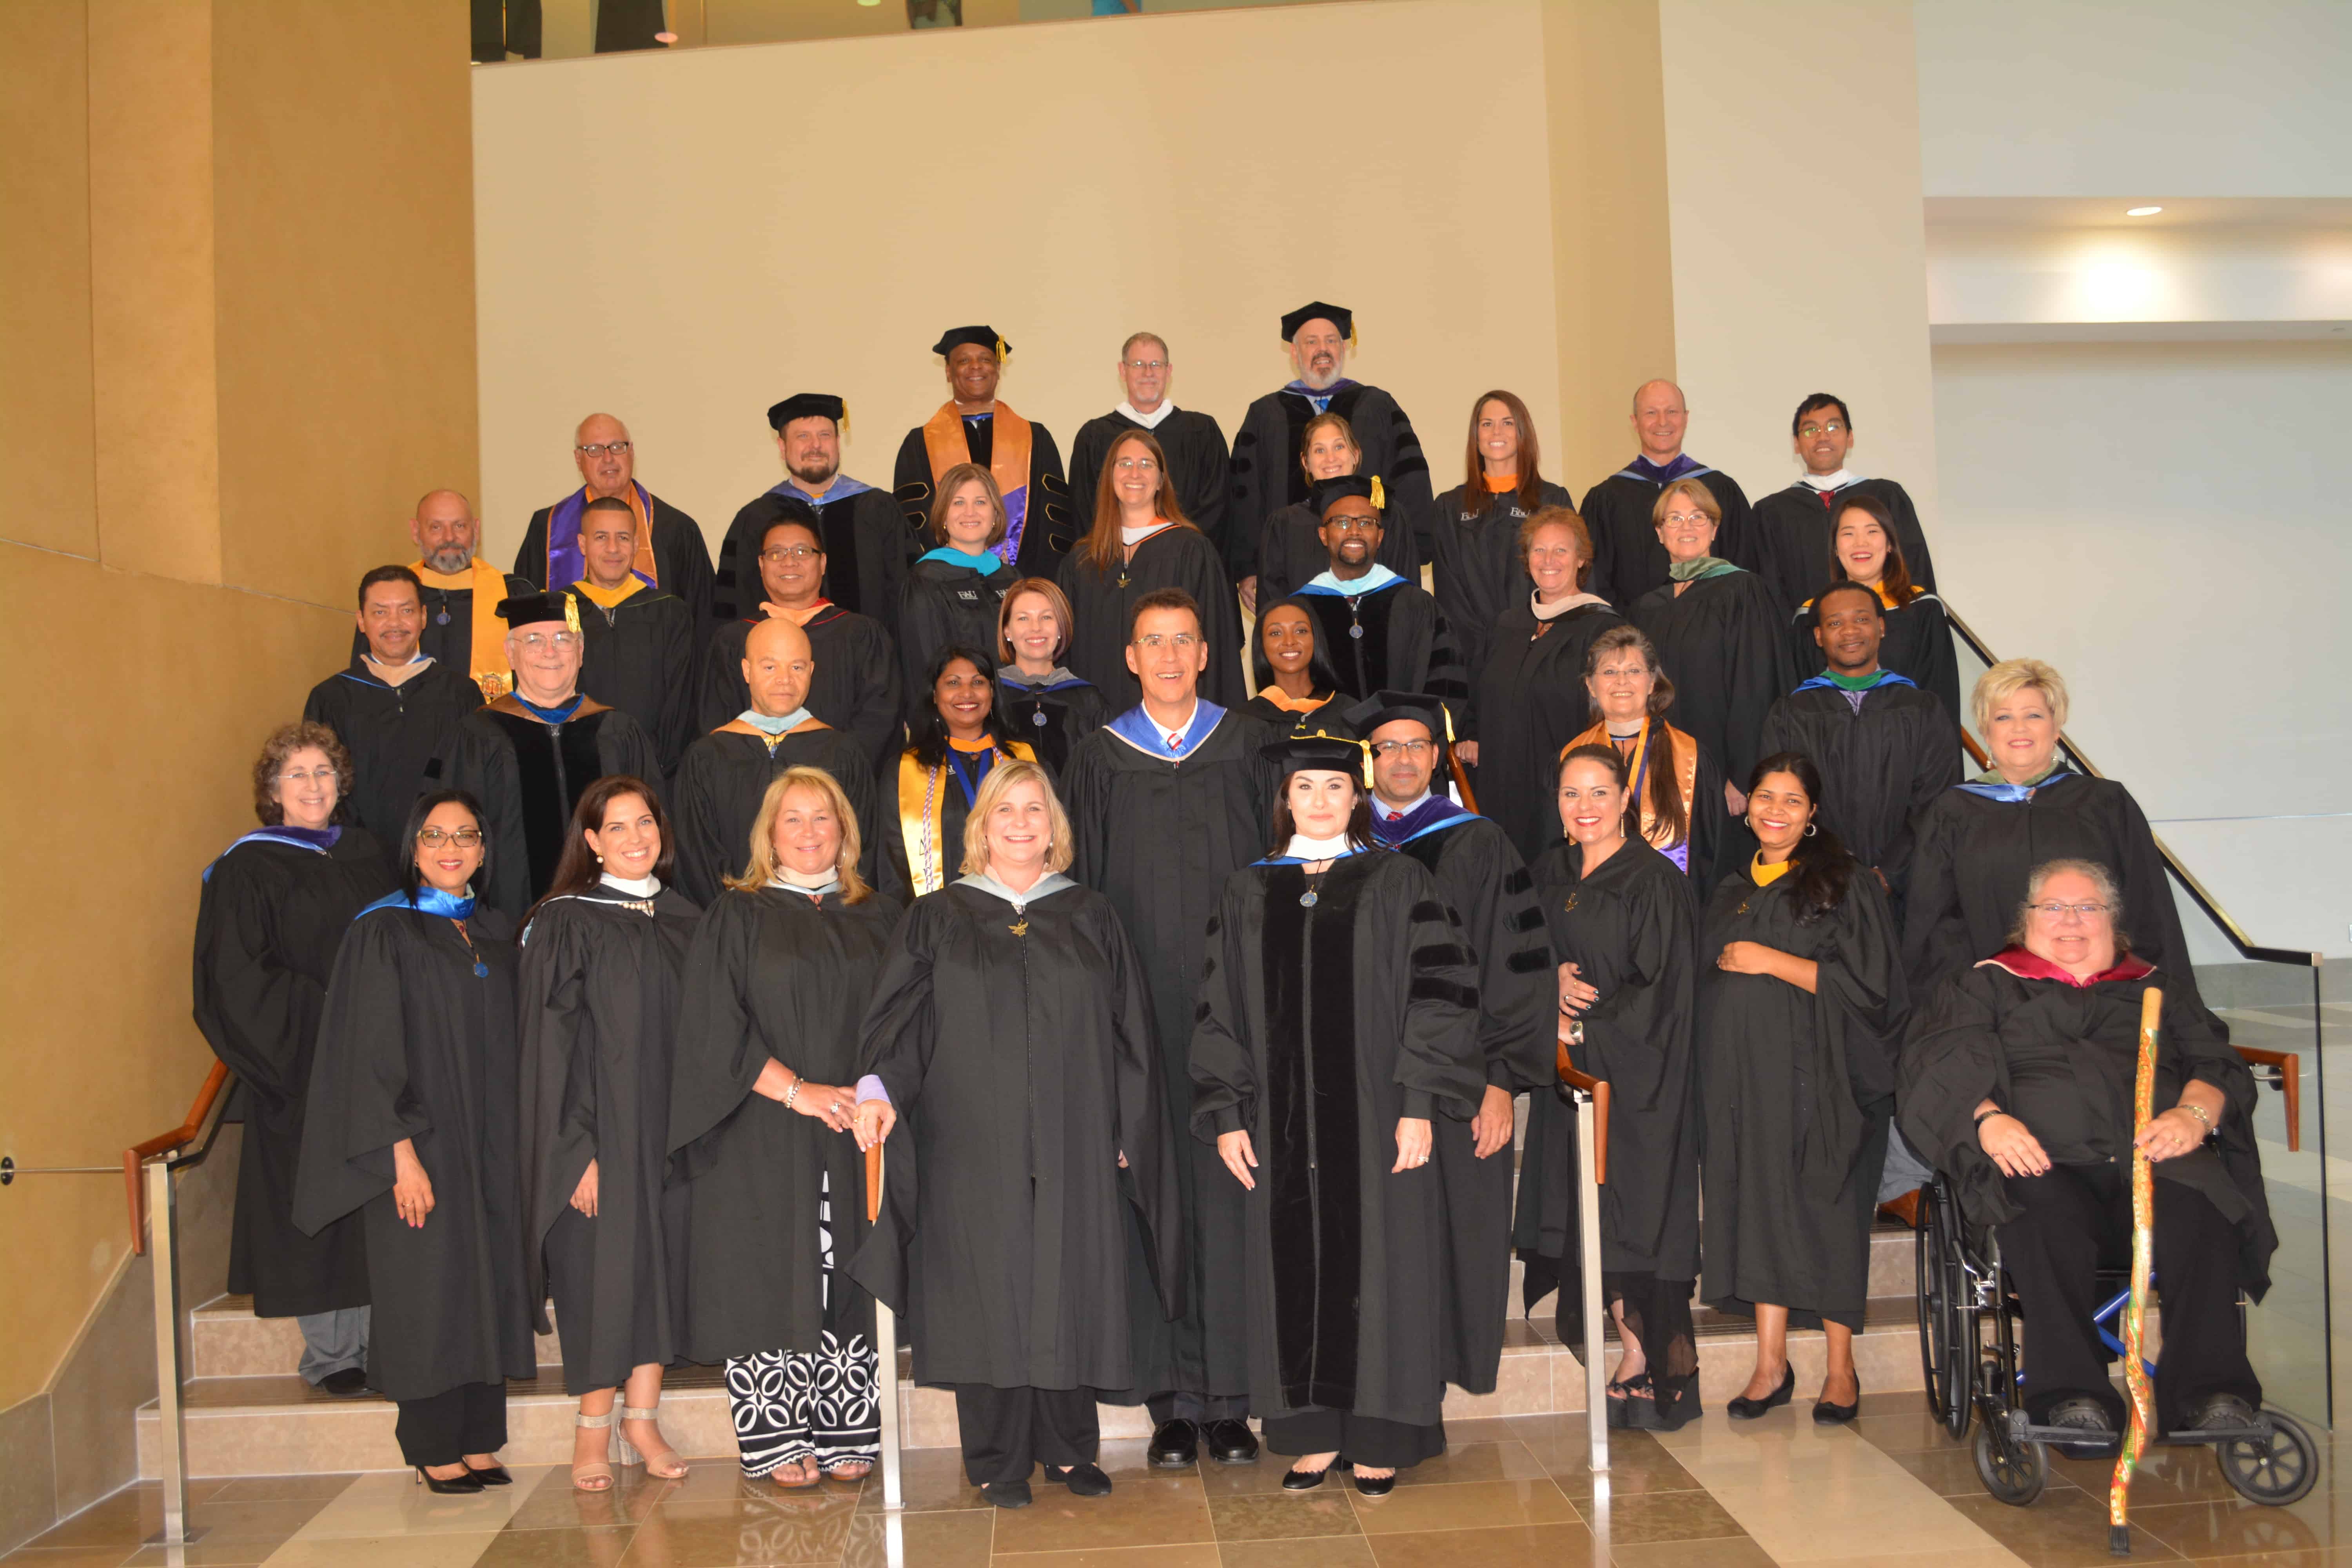 2015 Summer Graduation for West Palm Beach Campus